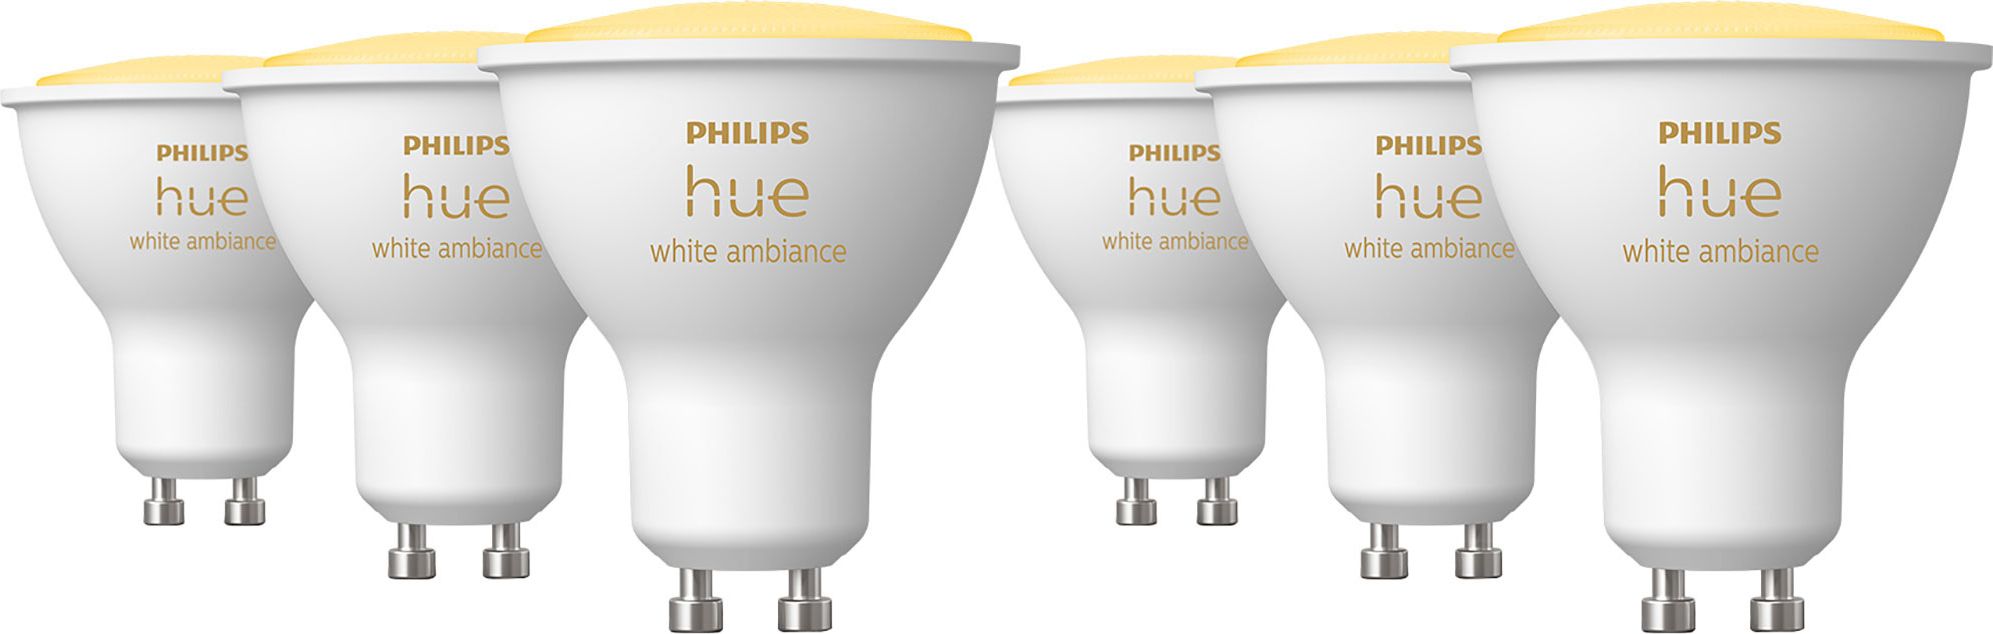 929001180640, Philips Hue Hub